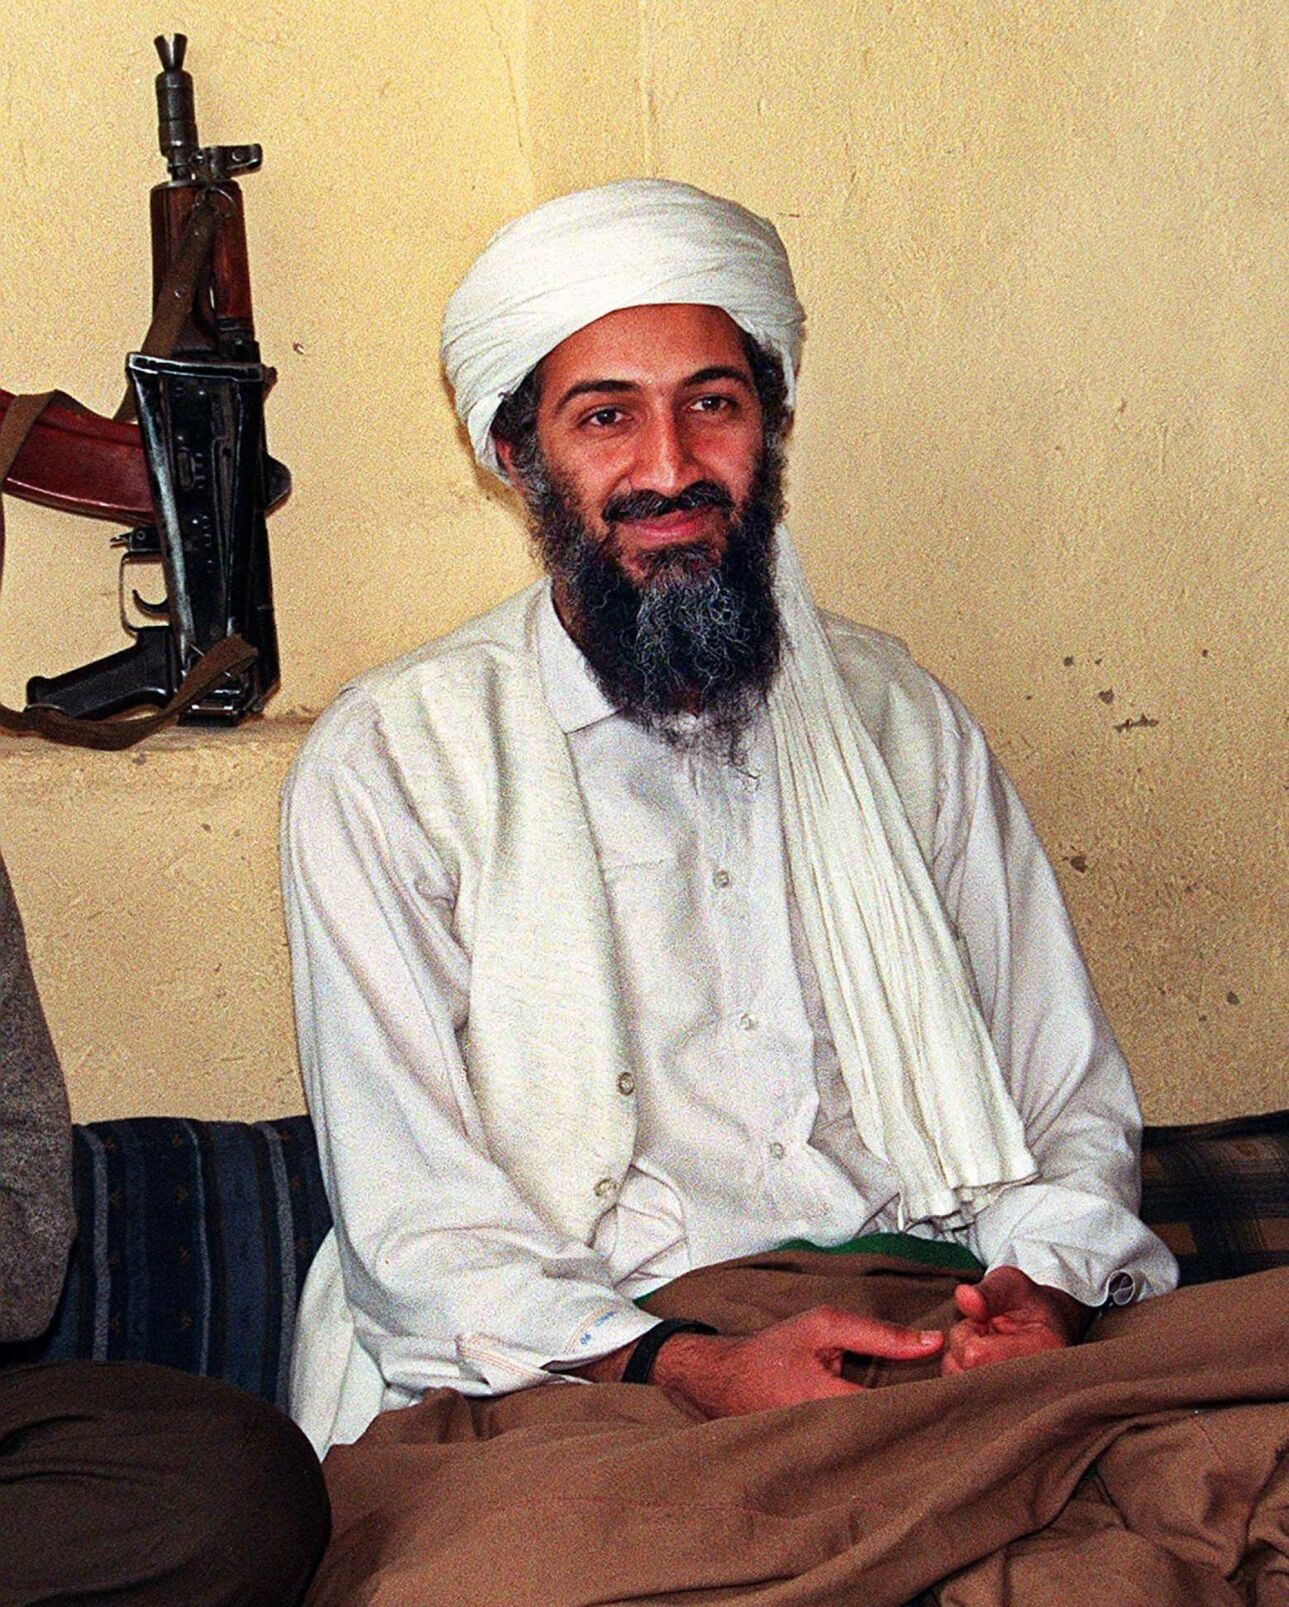 Osama Bin Laden's game and movie stash revealed | Newshub